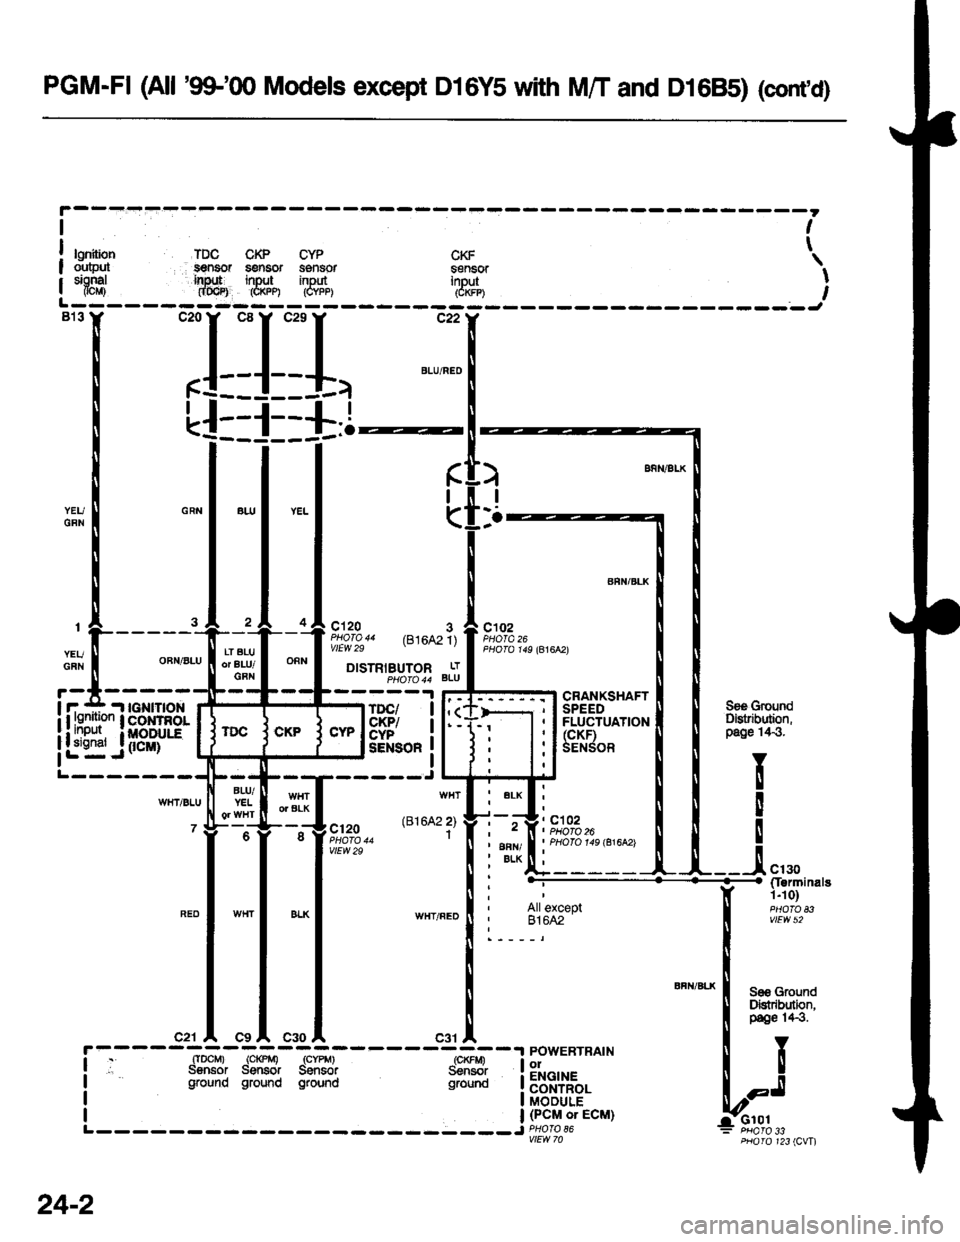 HONDA CIVIC 1996 6.G Service Manual PGM-FI (All 9$00 Models except D16Y5 with M/T and D1685) (contd)
ltrl! lgnition TDC CKP CYP CKF \I output sensor sensor ssnsor sensorI signal inpt$ input input input I
! ncut dDcB (CKpPr tdveel tCx